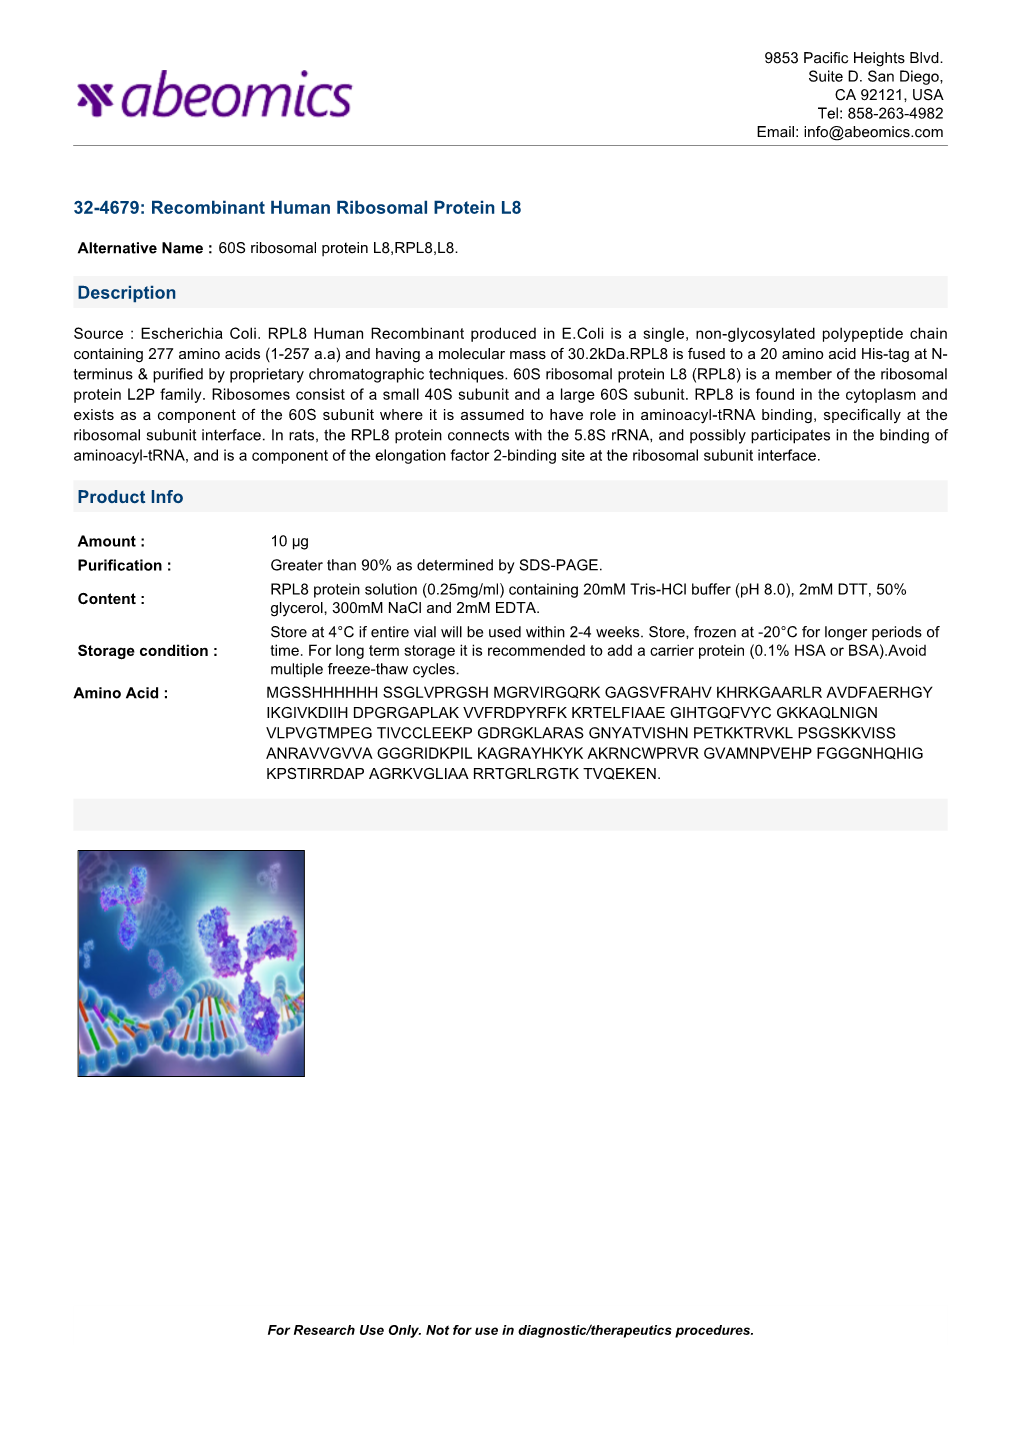 Recombinant Human Ribosomal Protein L8 Description